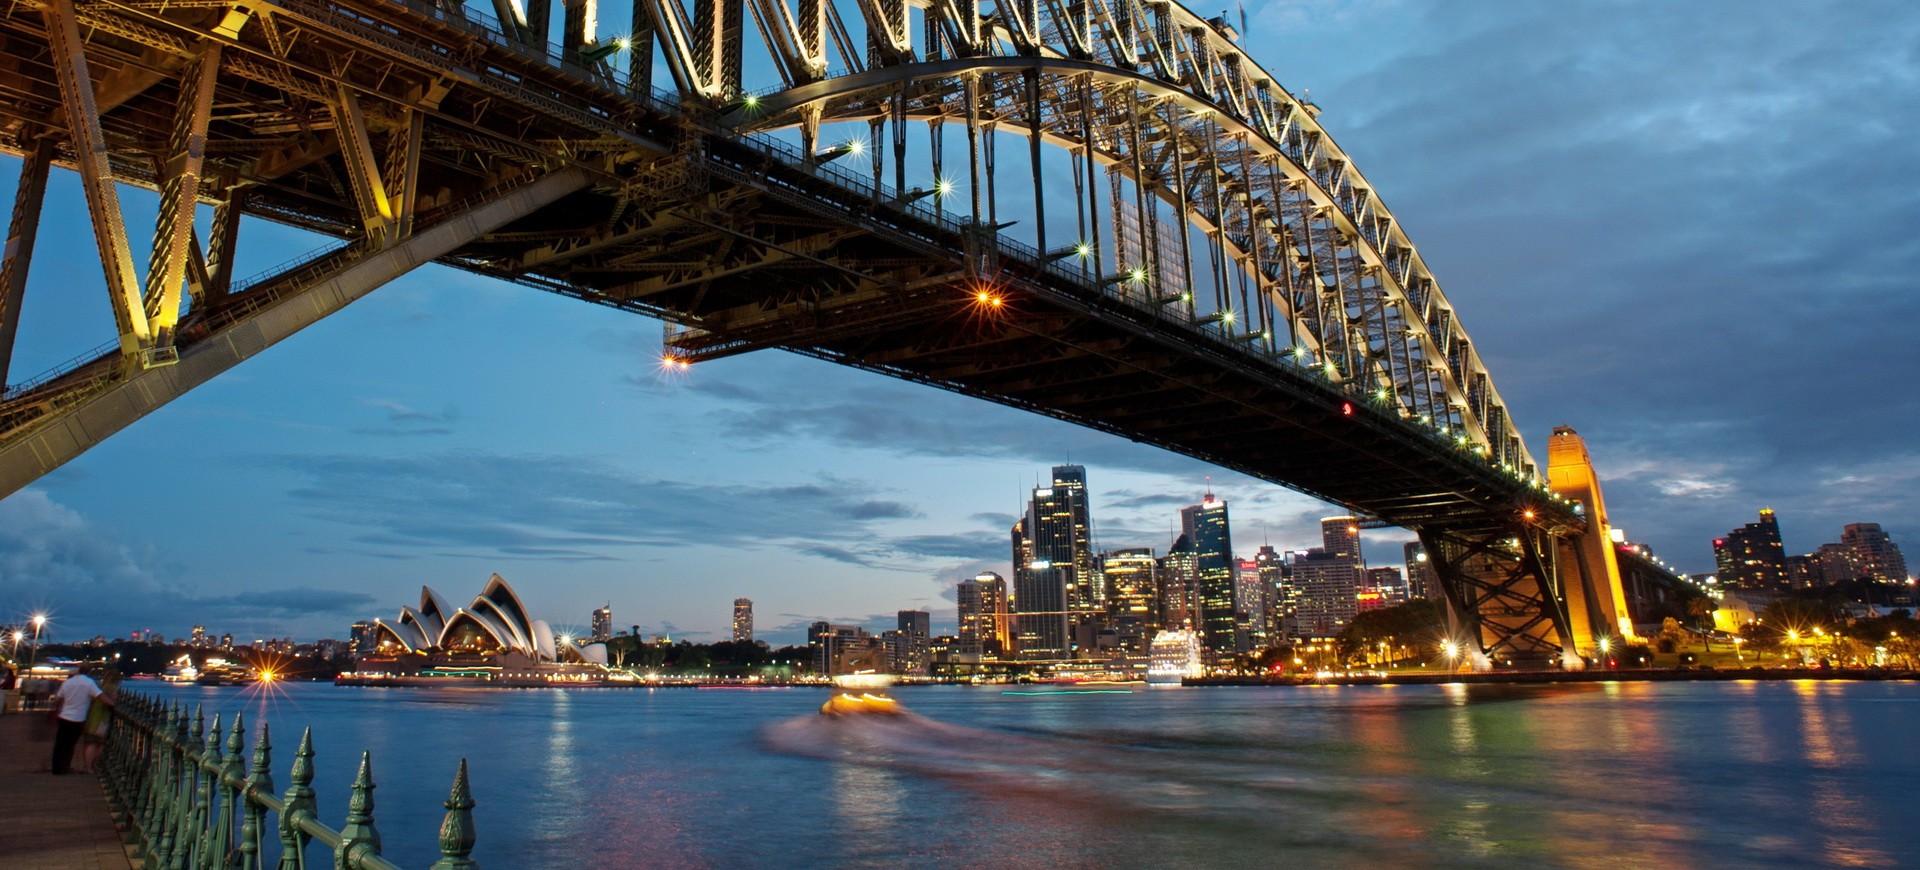 Australie Sydney Harbour Bridge by night